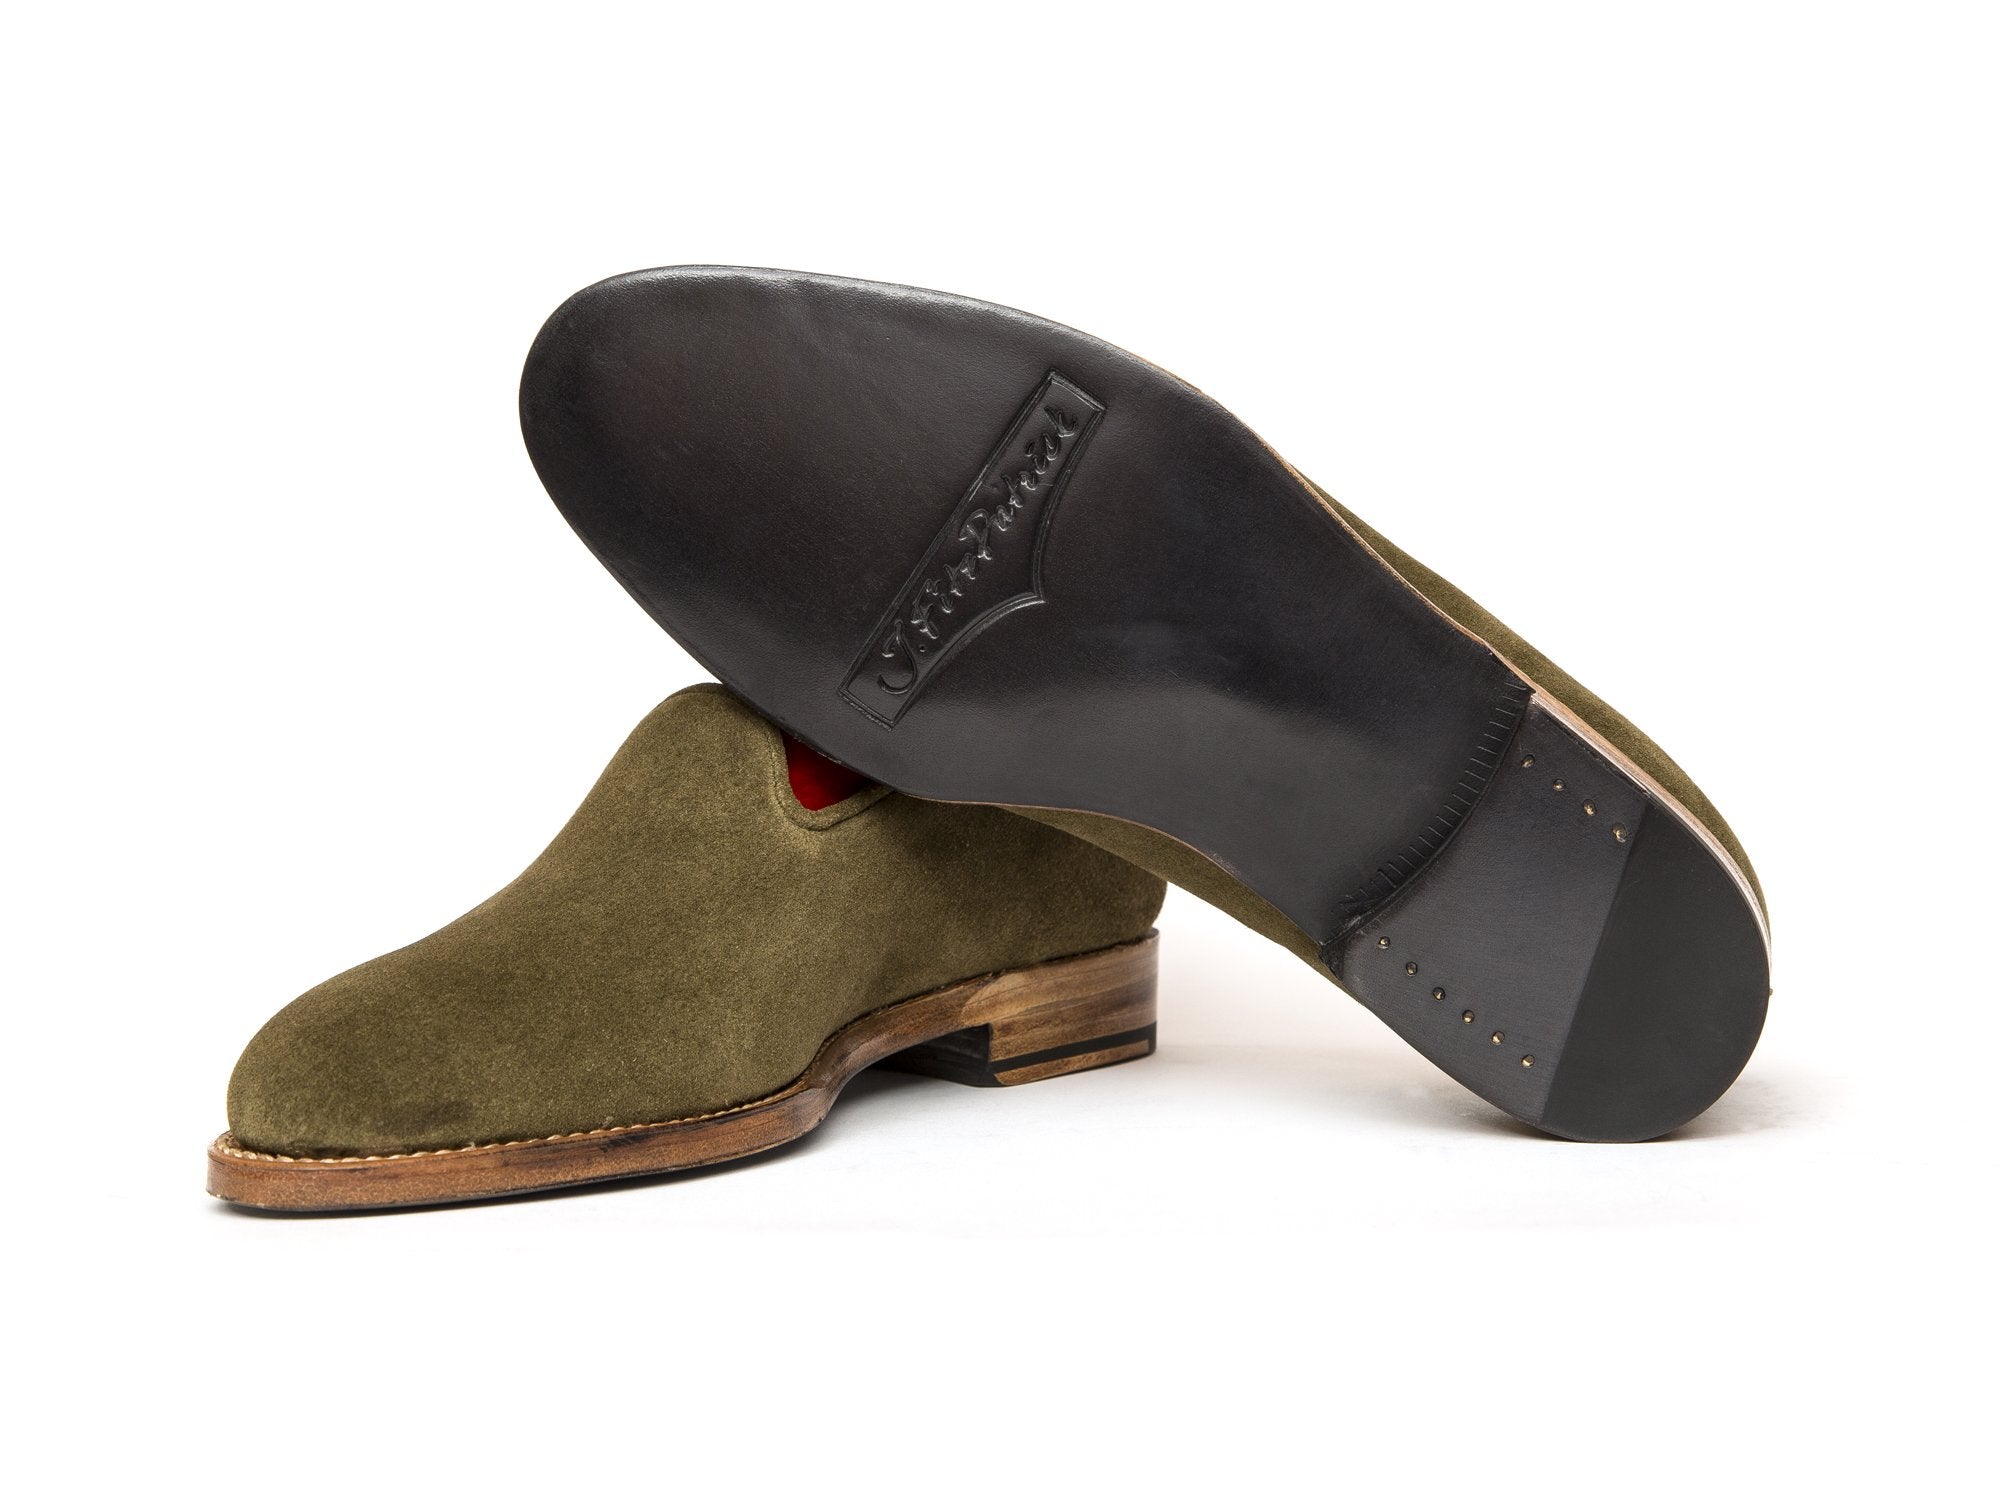 J.FitzPatrick Footwear - Laurelhurst II - Olive Suede - TMG Last - Natural Sole